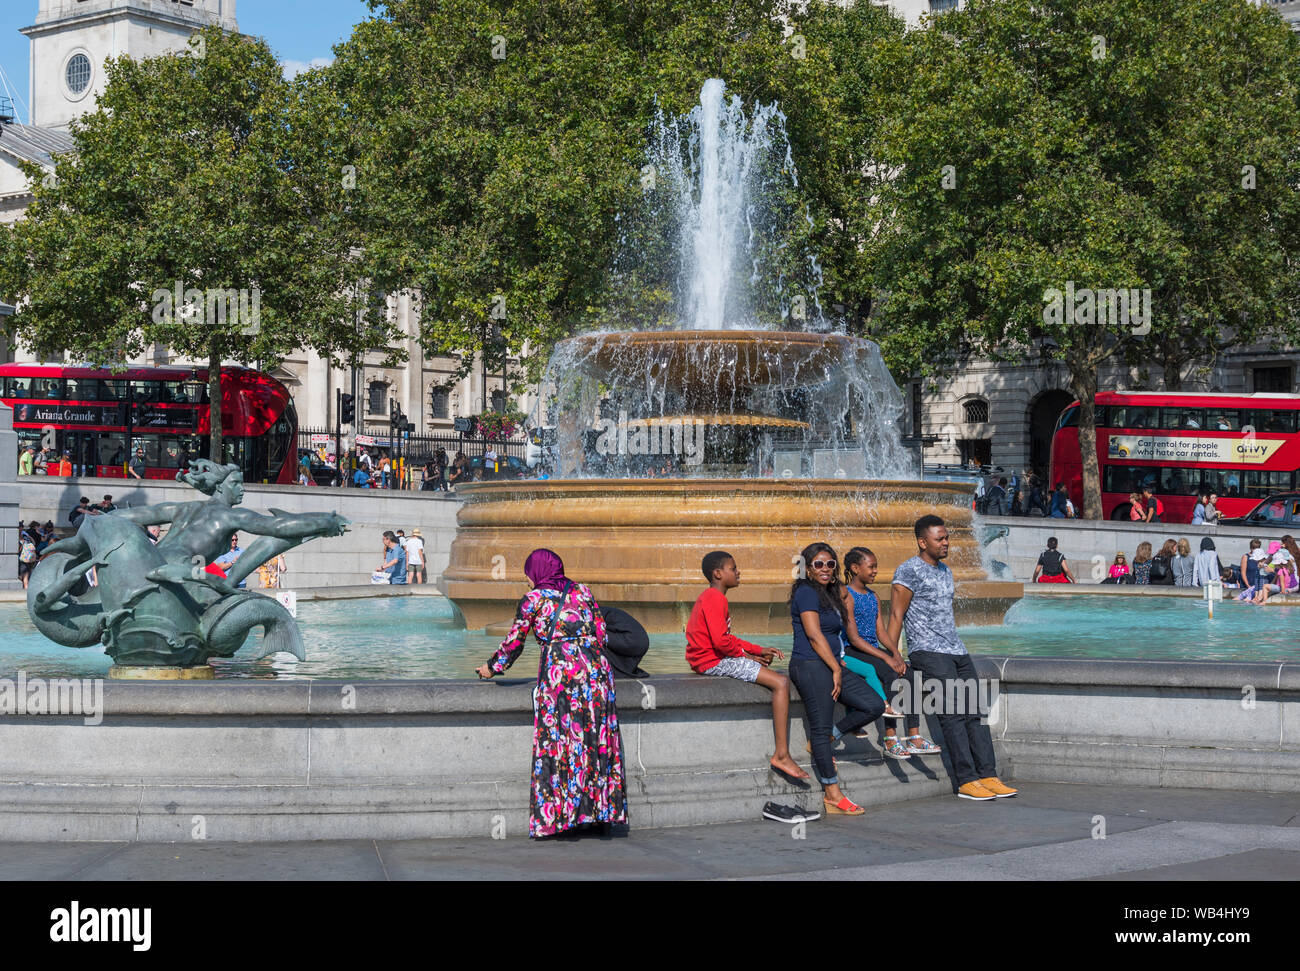 Brunnen und Touristen auf dem Trafalgar Square, Charing Cross, Westminster, London, England, UK. Stockfoto